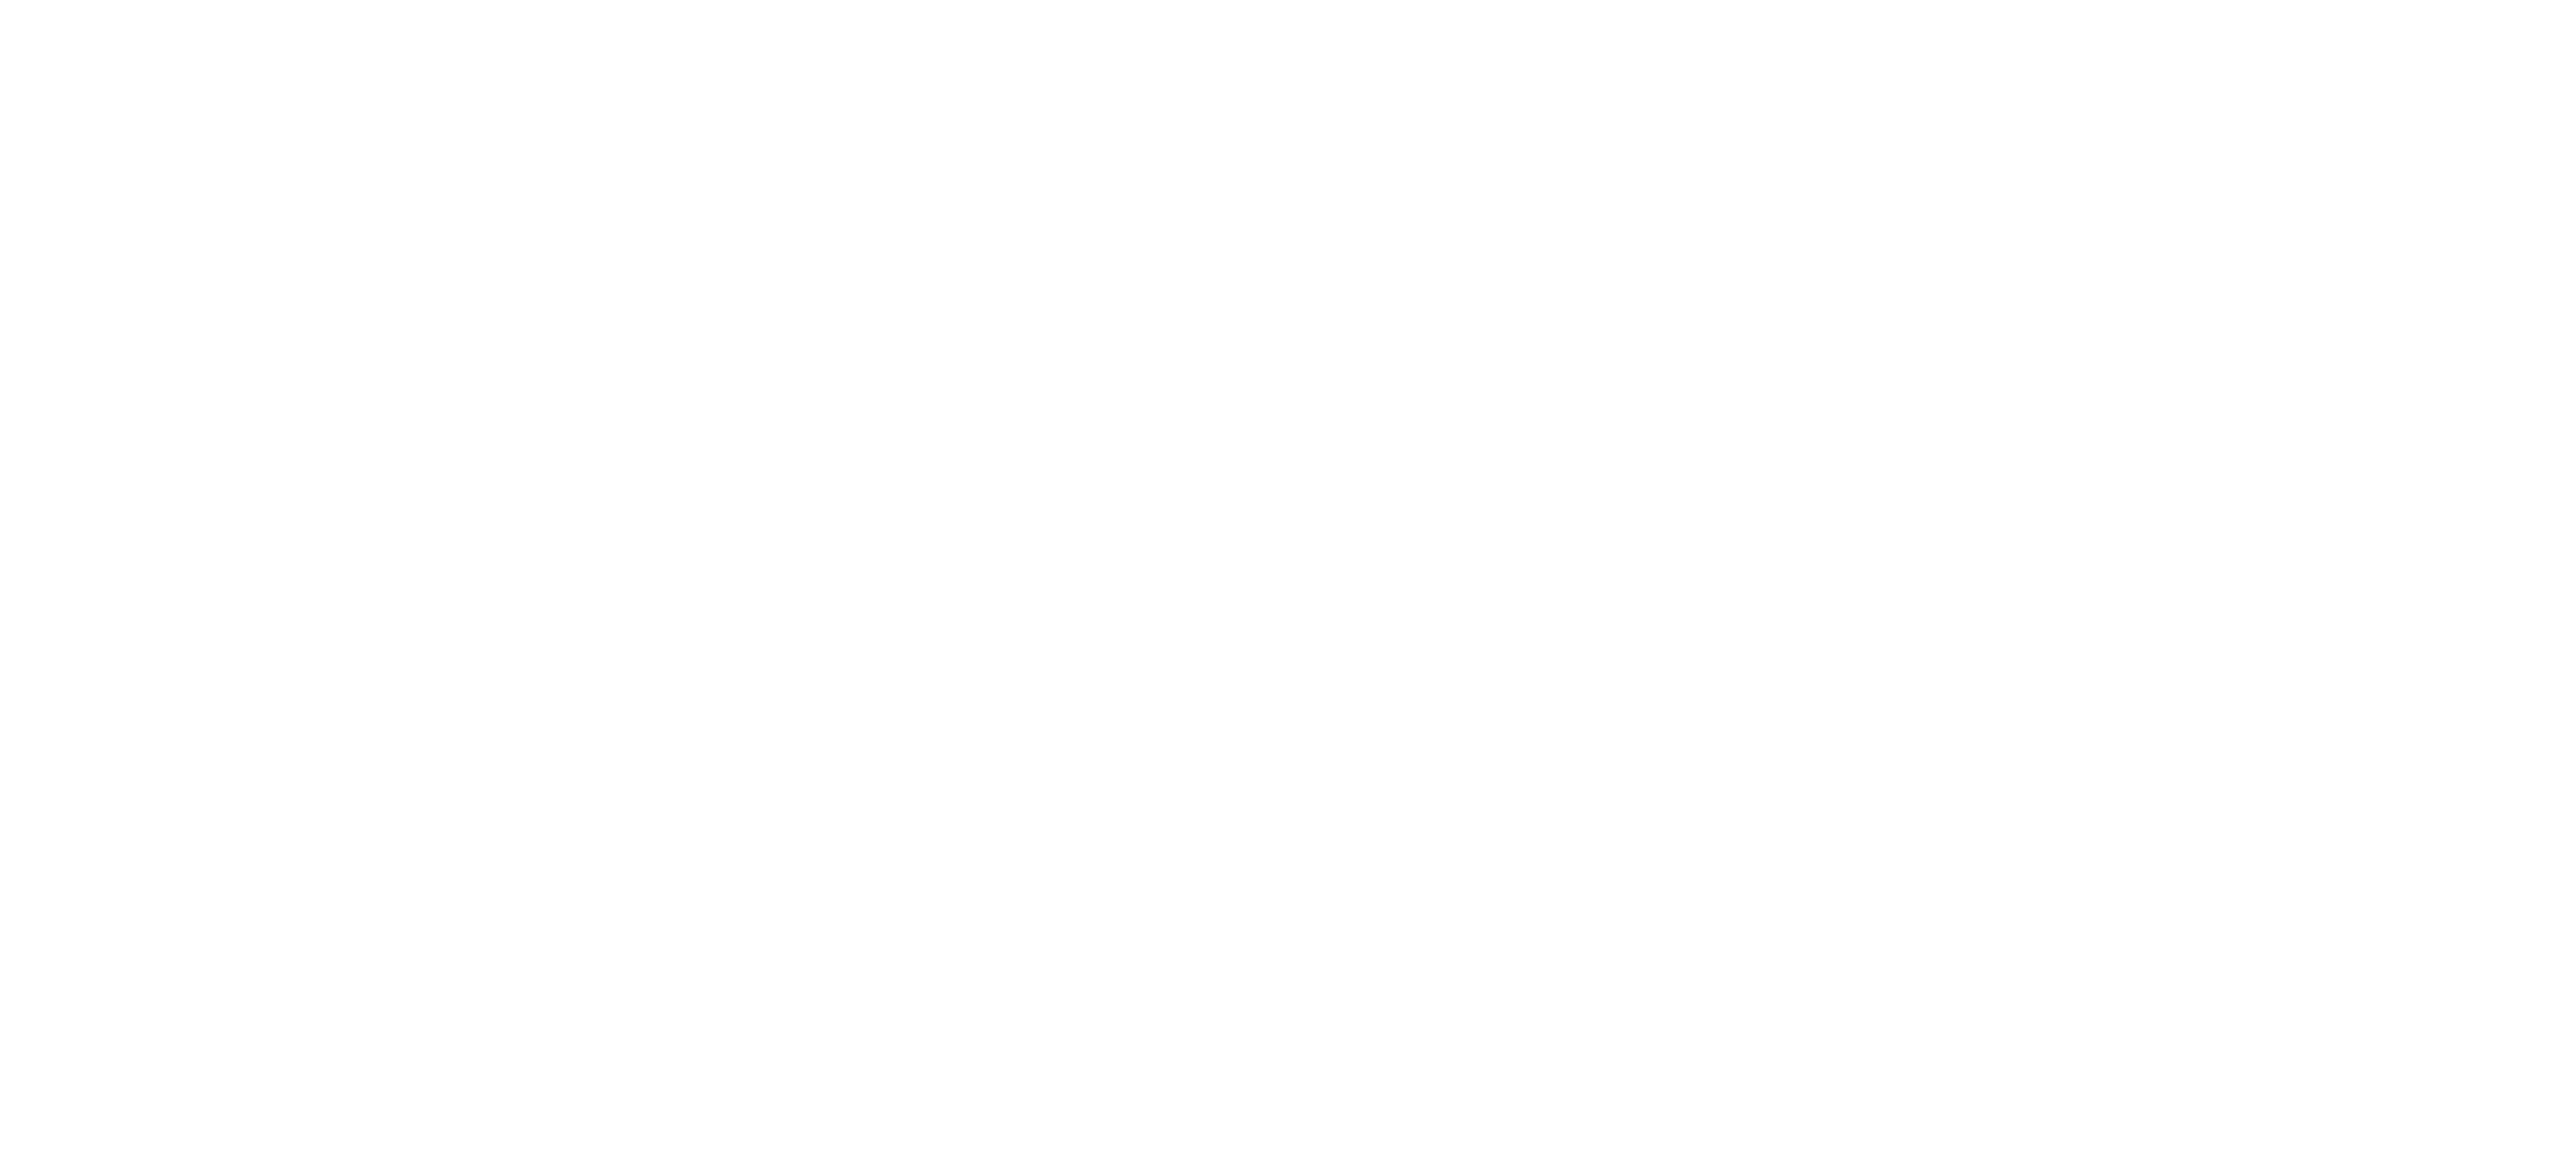 CopyHawk logo